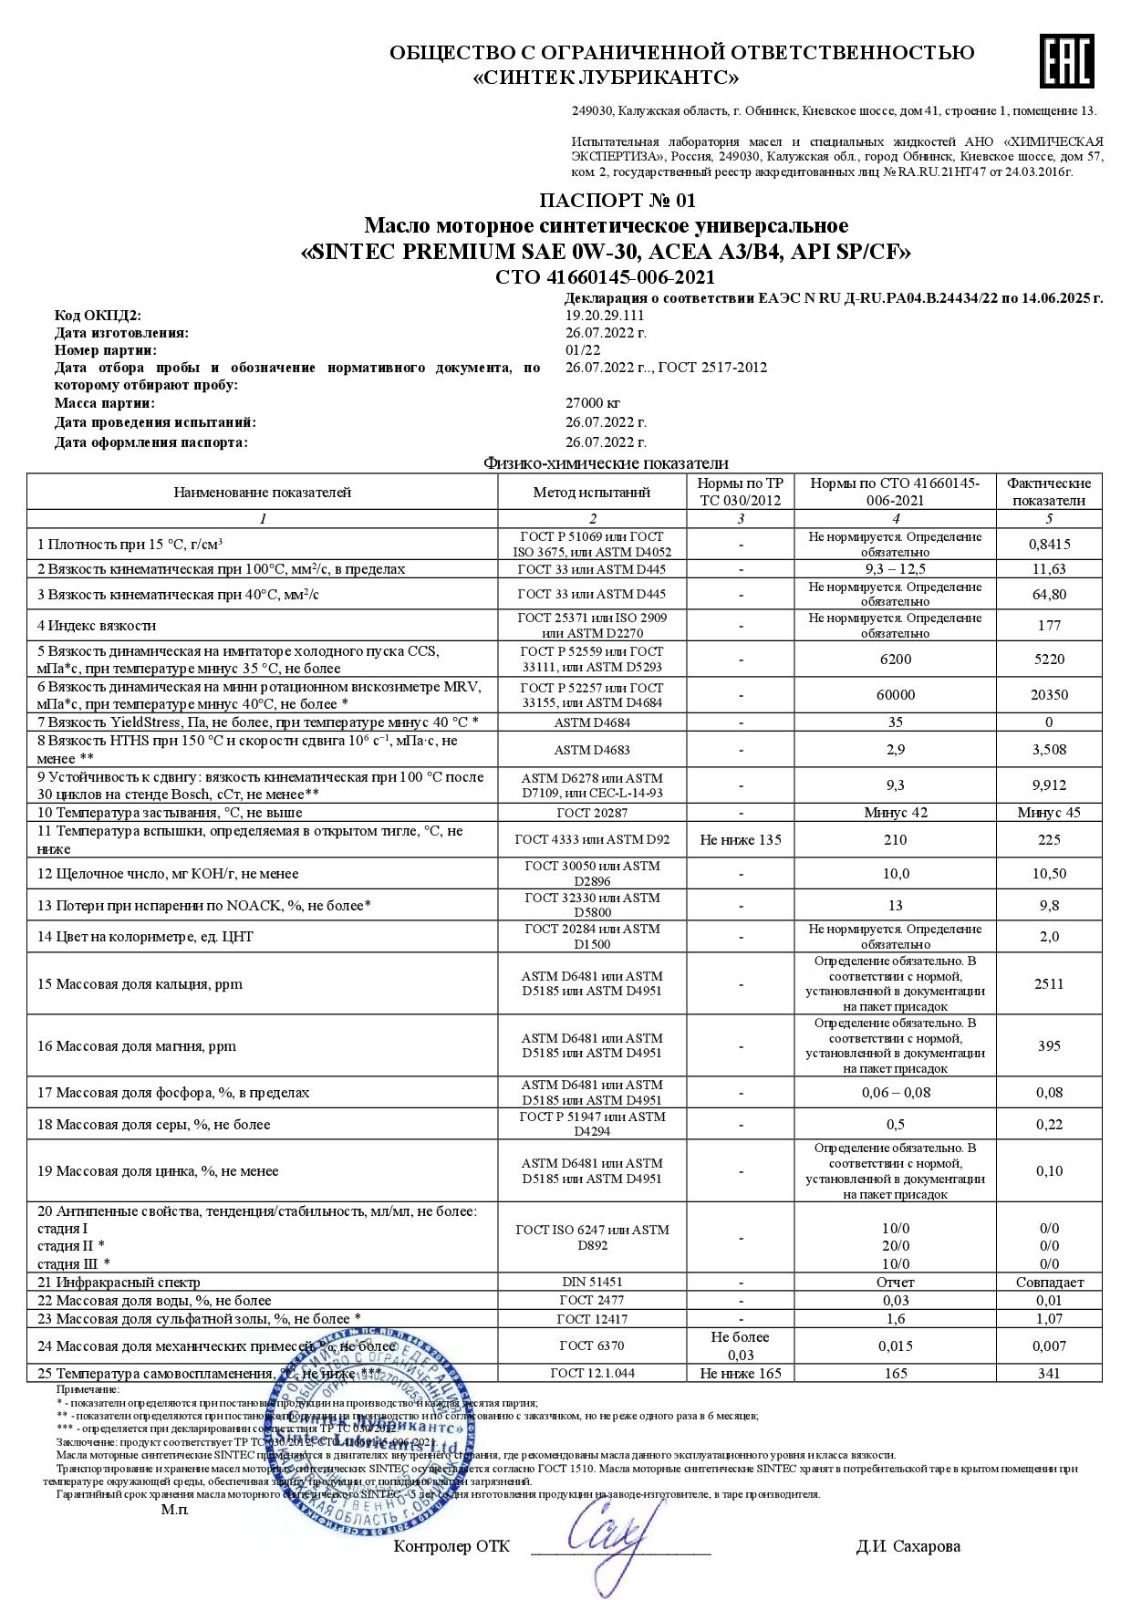 SINTEC PREMIUM SAE 0W-30, ACEA A3-B4, API SP-CF СТО 006 (01-22) 26.07.2022 г.jpg